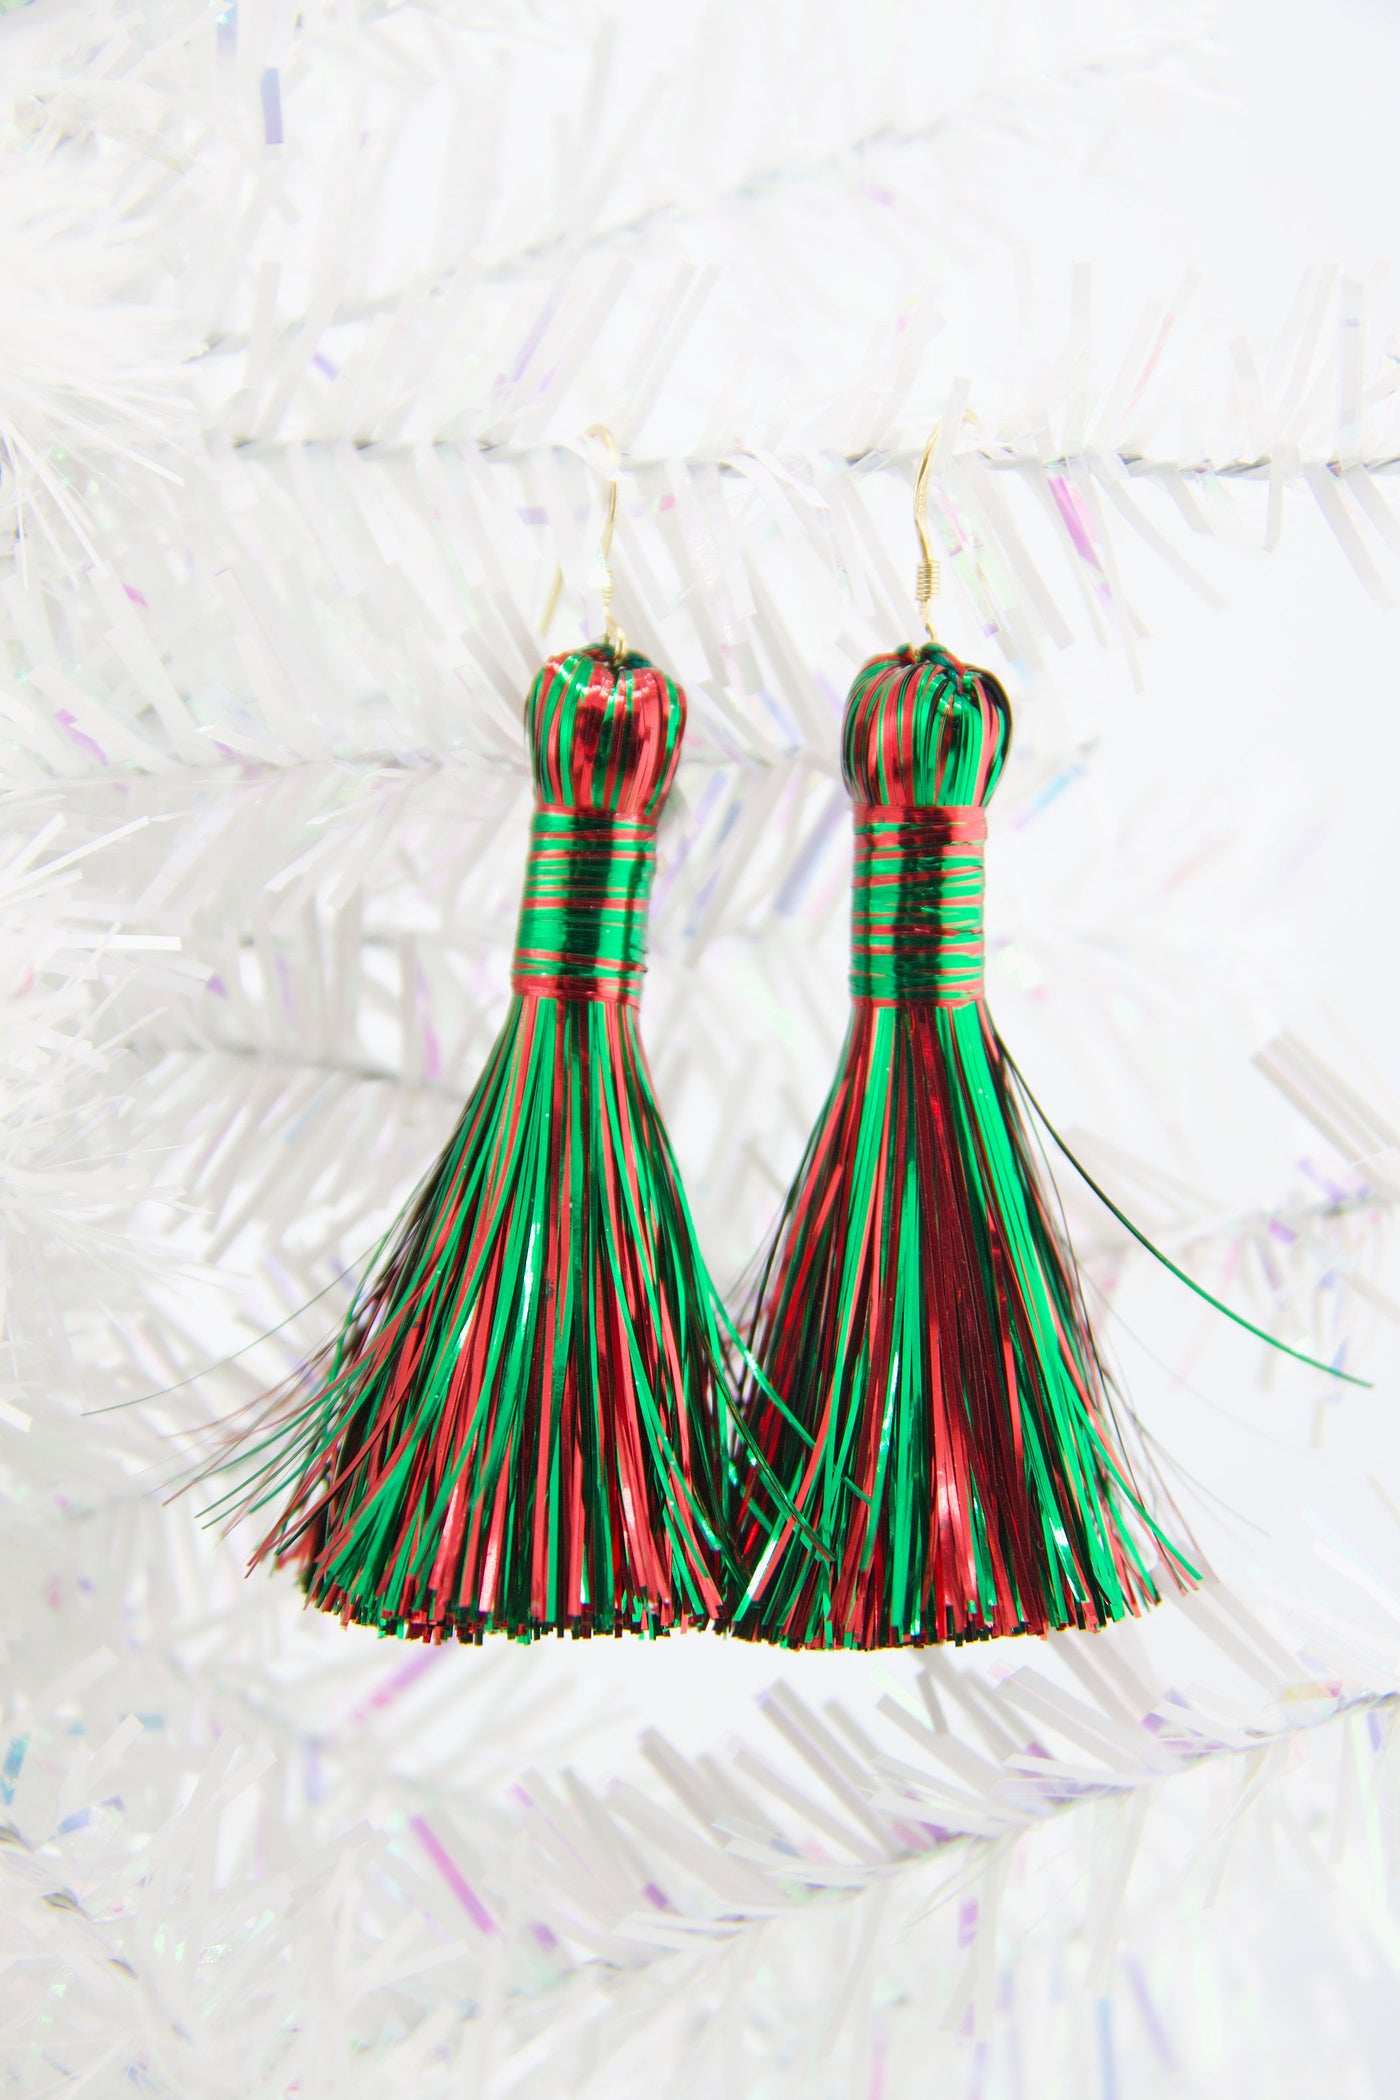 Red & Green Christmas Tinsel Tassel Earrings, 2.25" Metallic Jewelry Making Tassels, 2 pcs